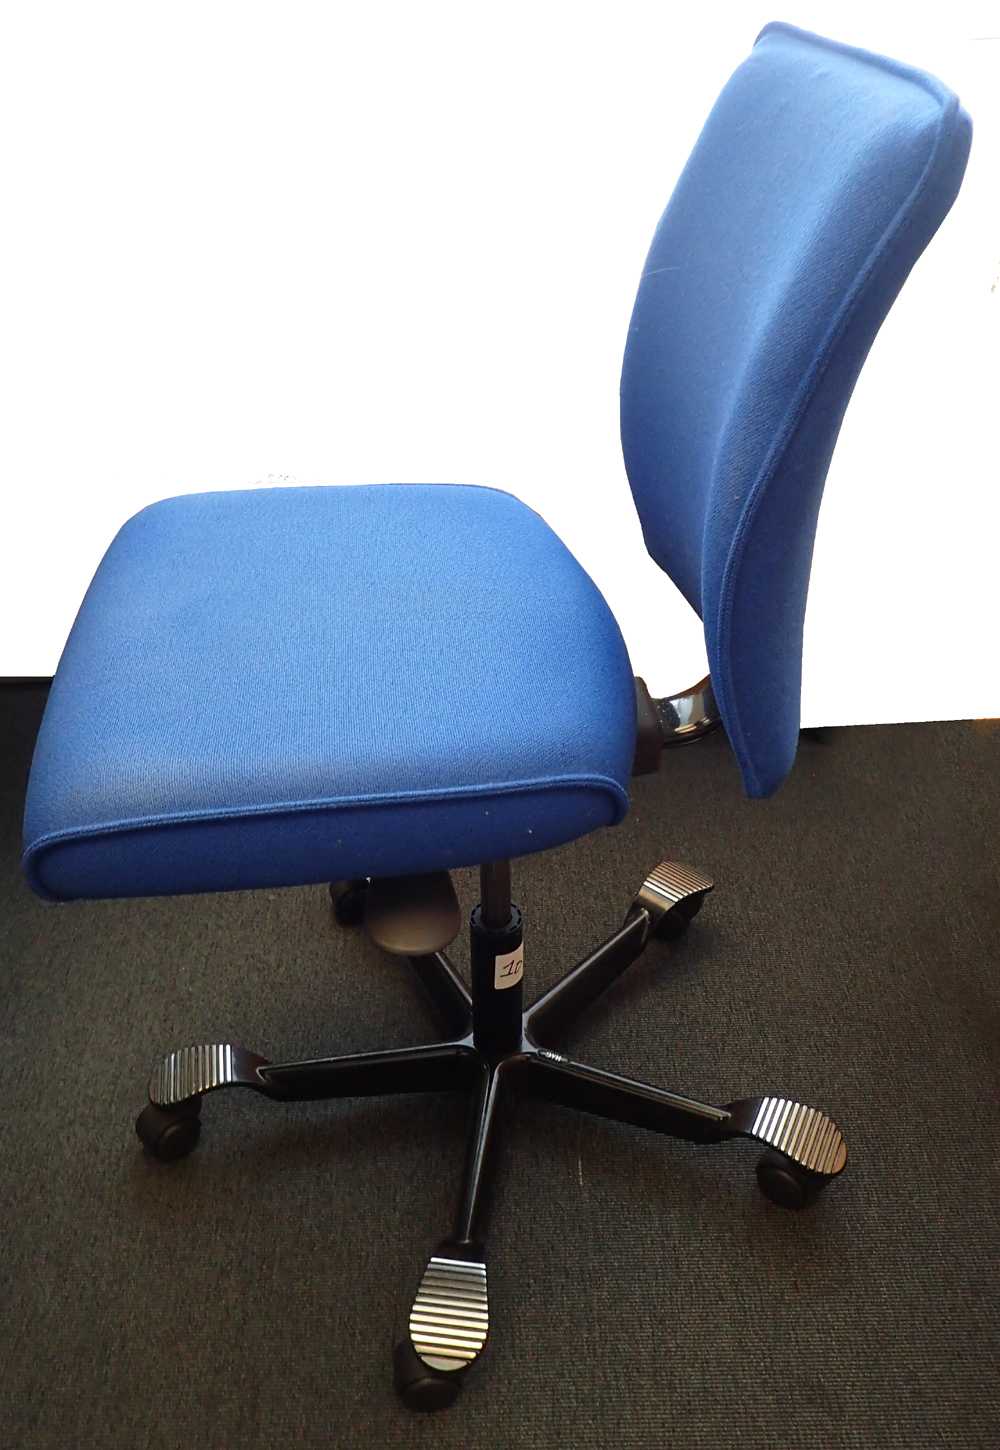 185-02213 Officechair - blue